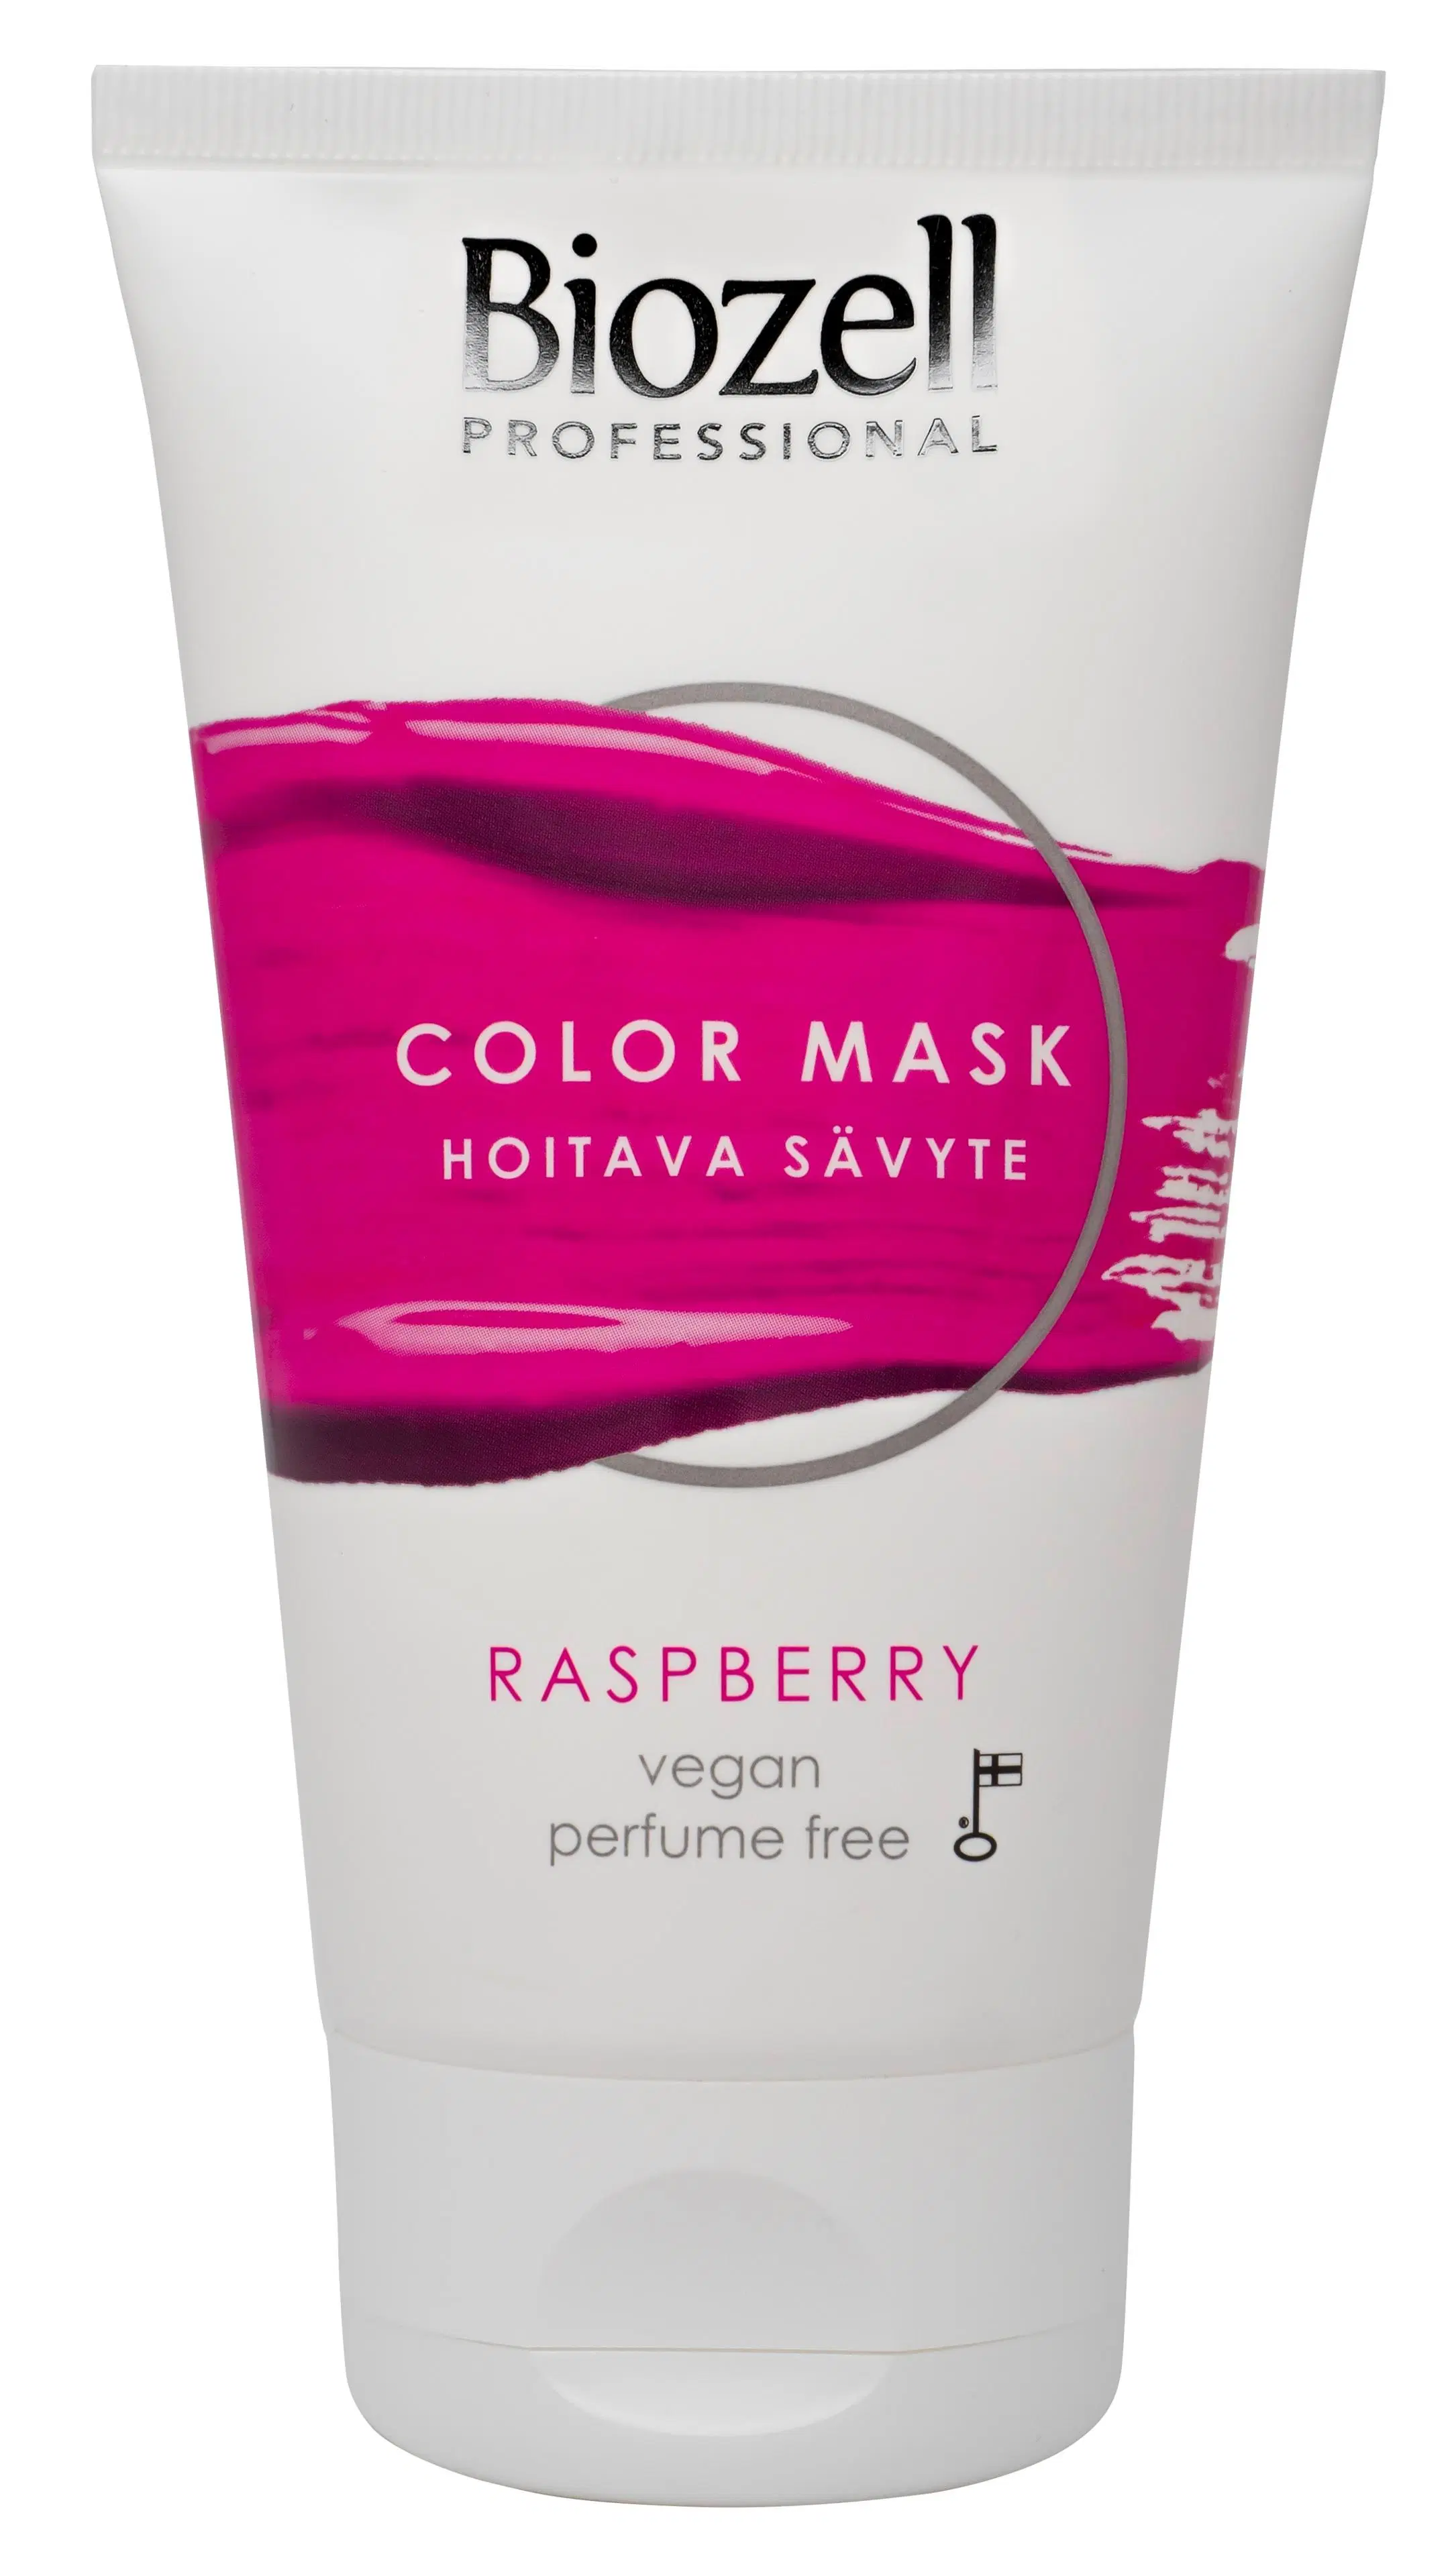 Biozell Professional Color Mask Hoitava Sävyte Raspberry 150ml